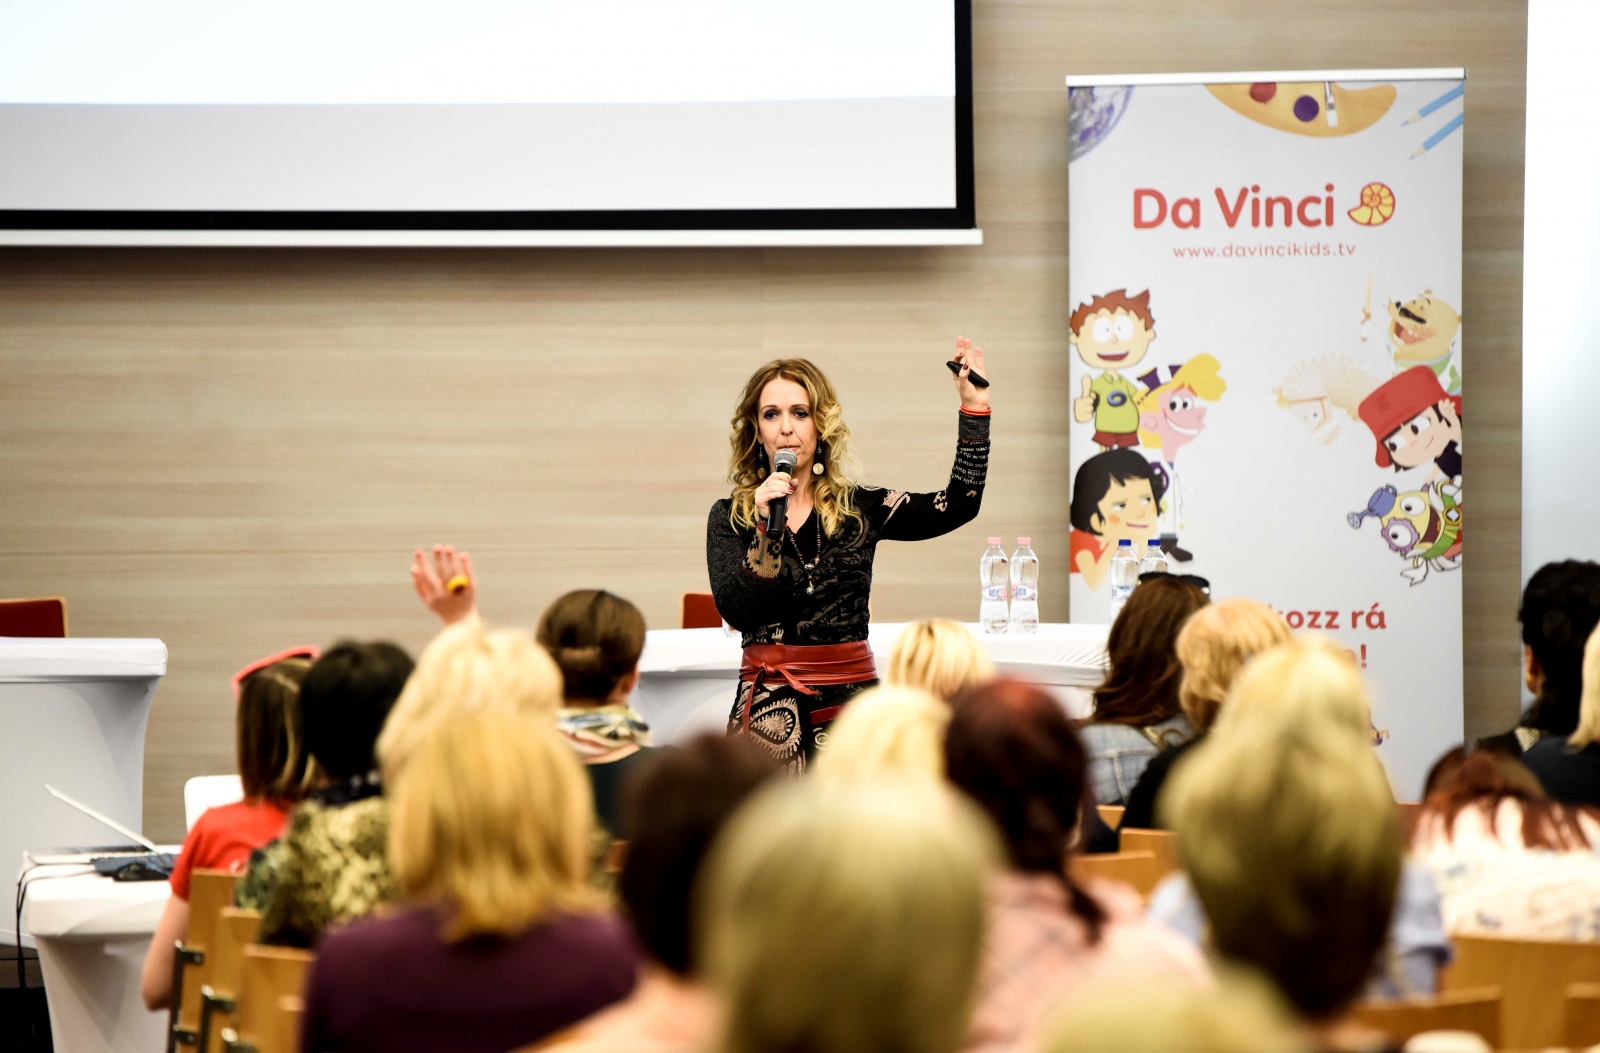 Da Vinci TV csatorna magyarországi nagykövete